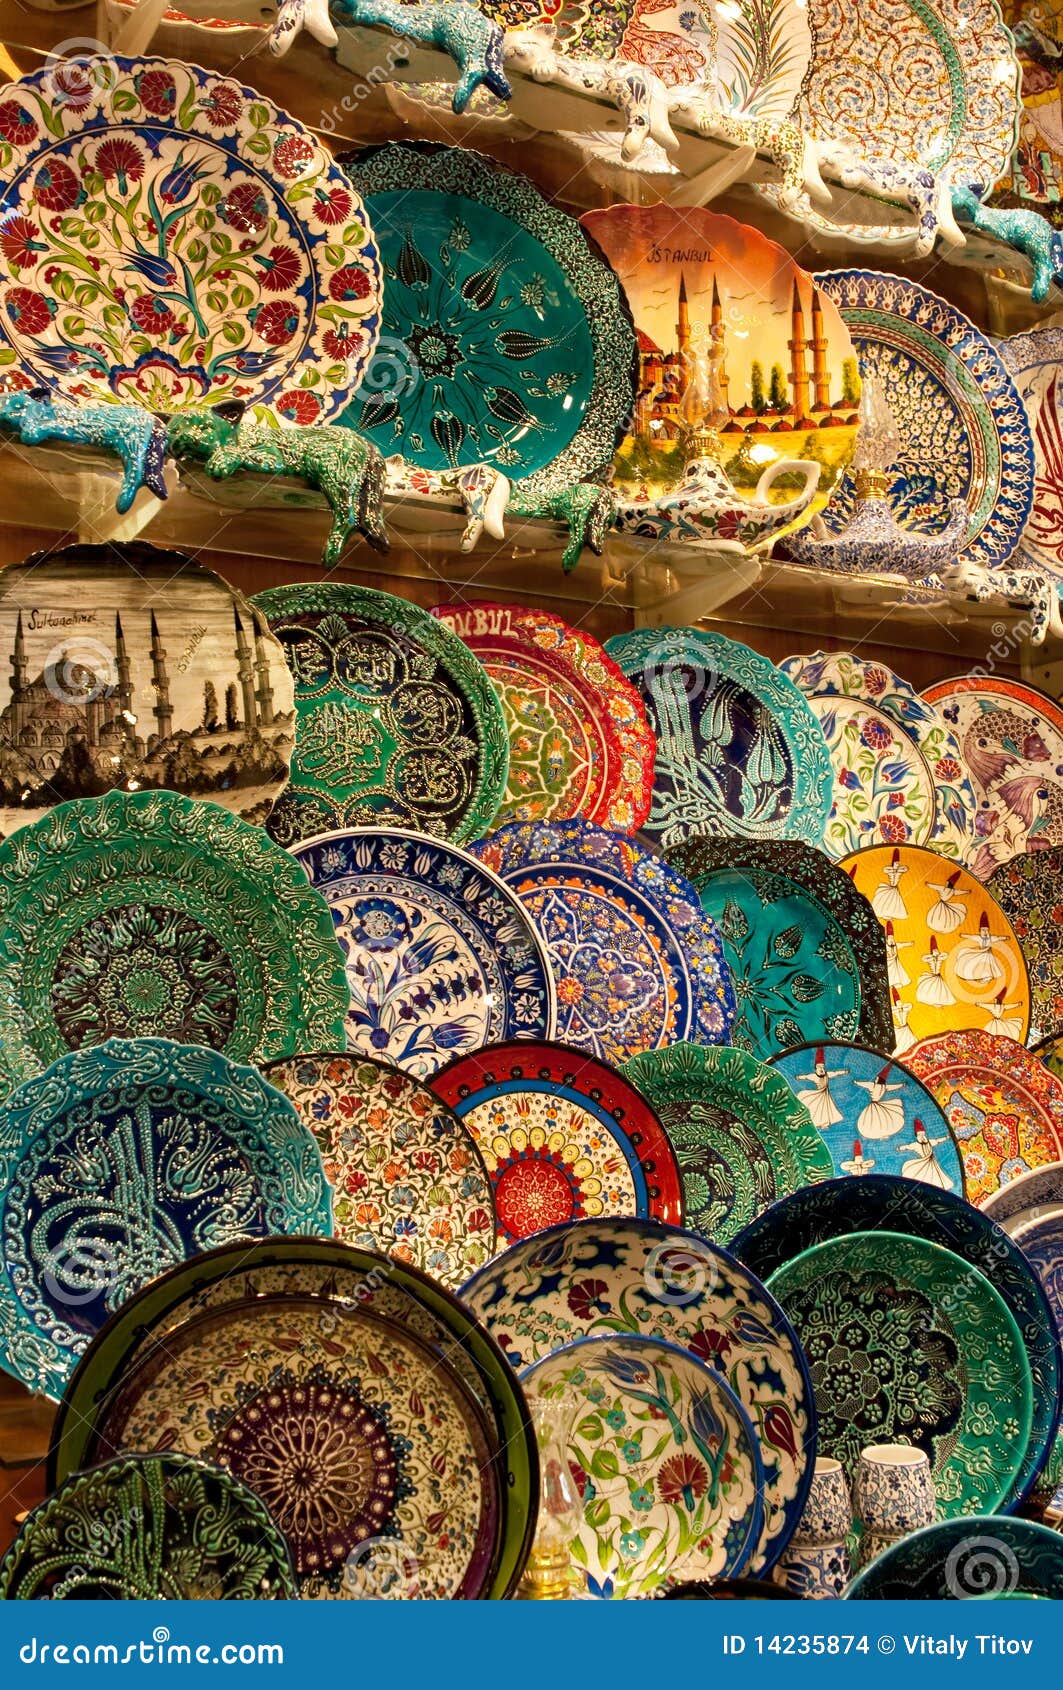 Handmade Hand painted Turkish Ottoman Ceramic 10 inch Plate  #5757 